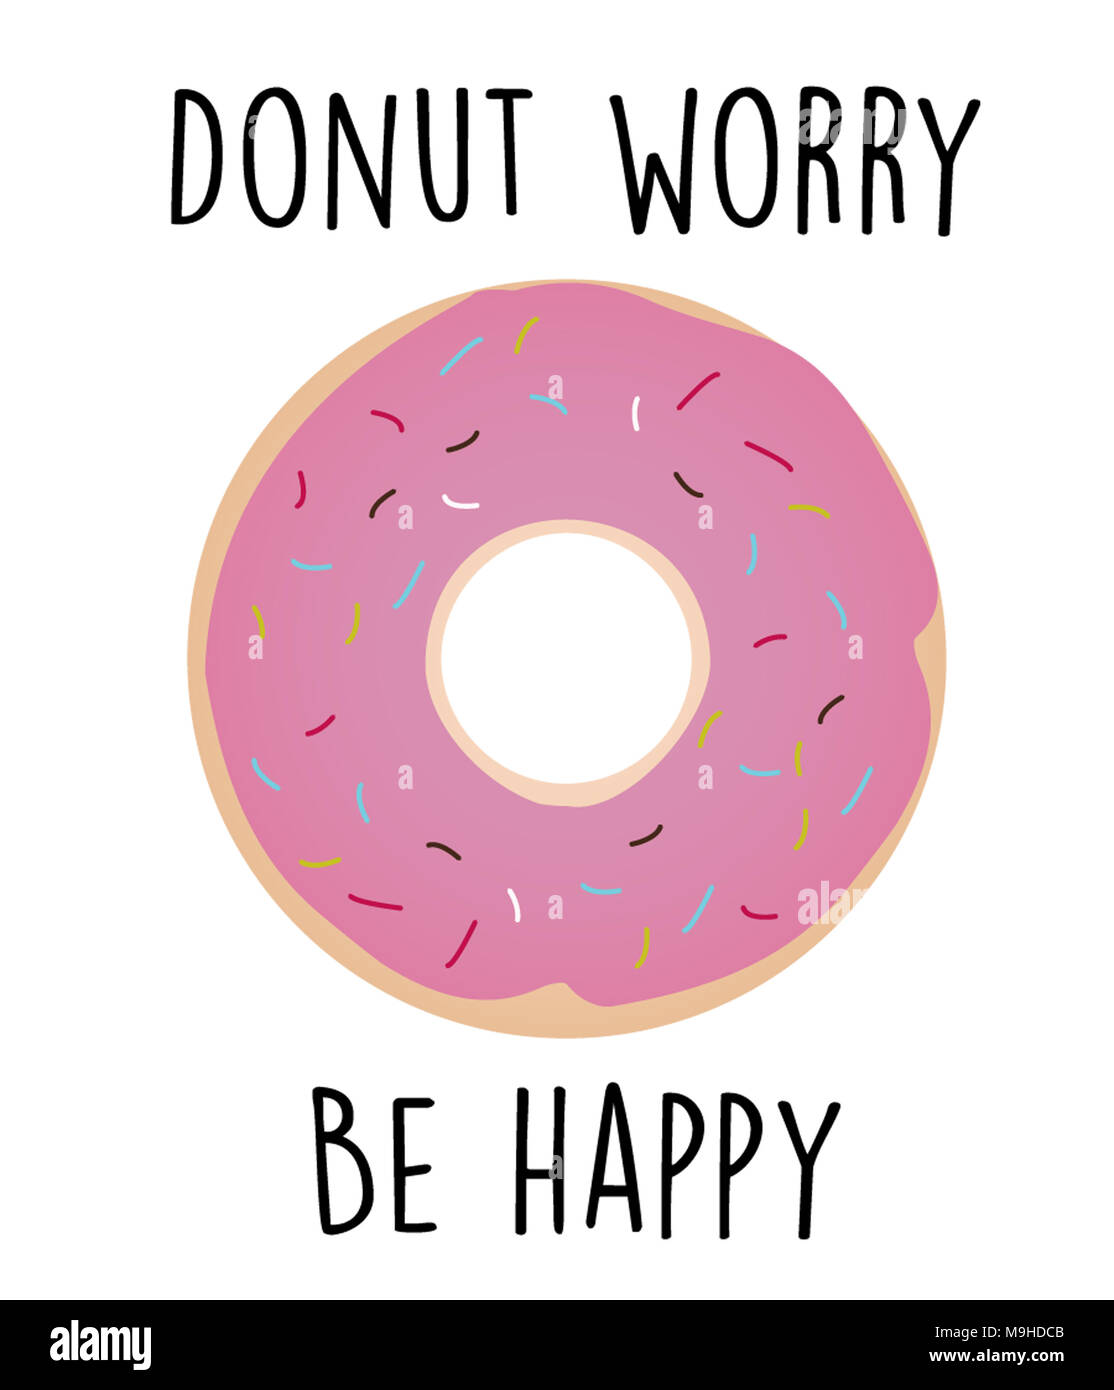 Donut worry Be happy Stock Photo